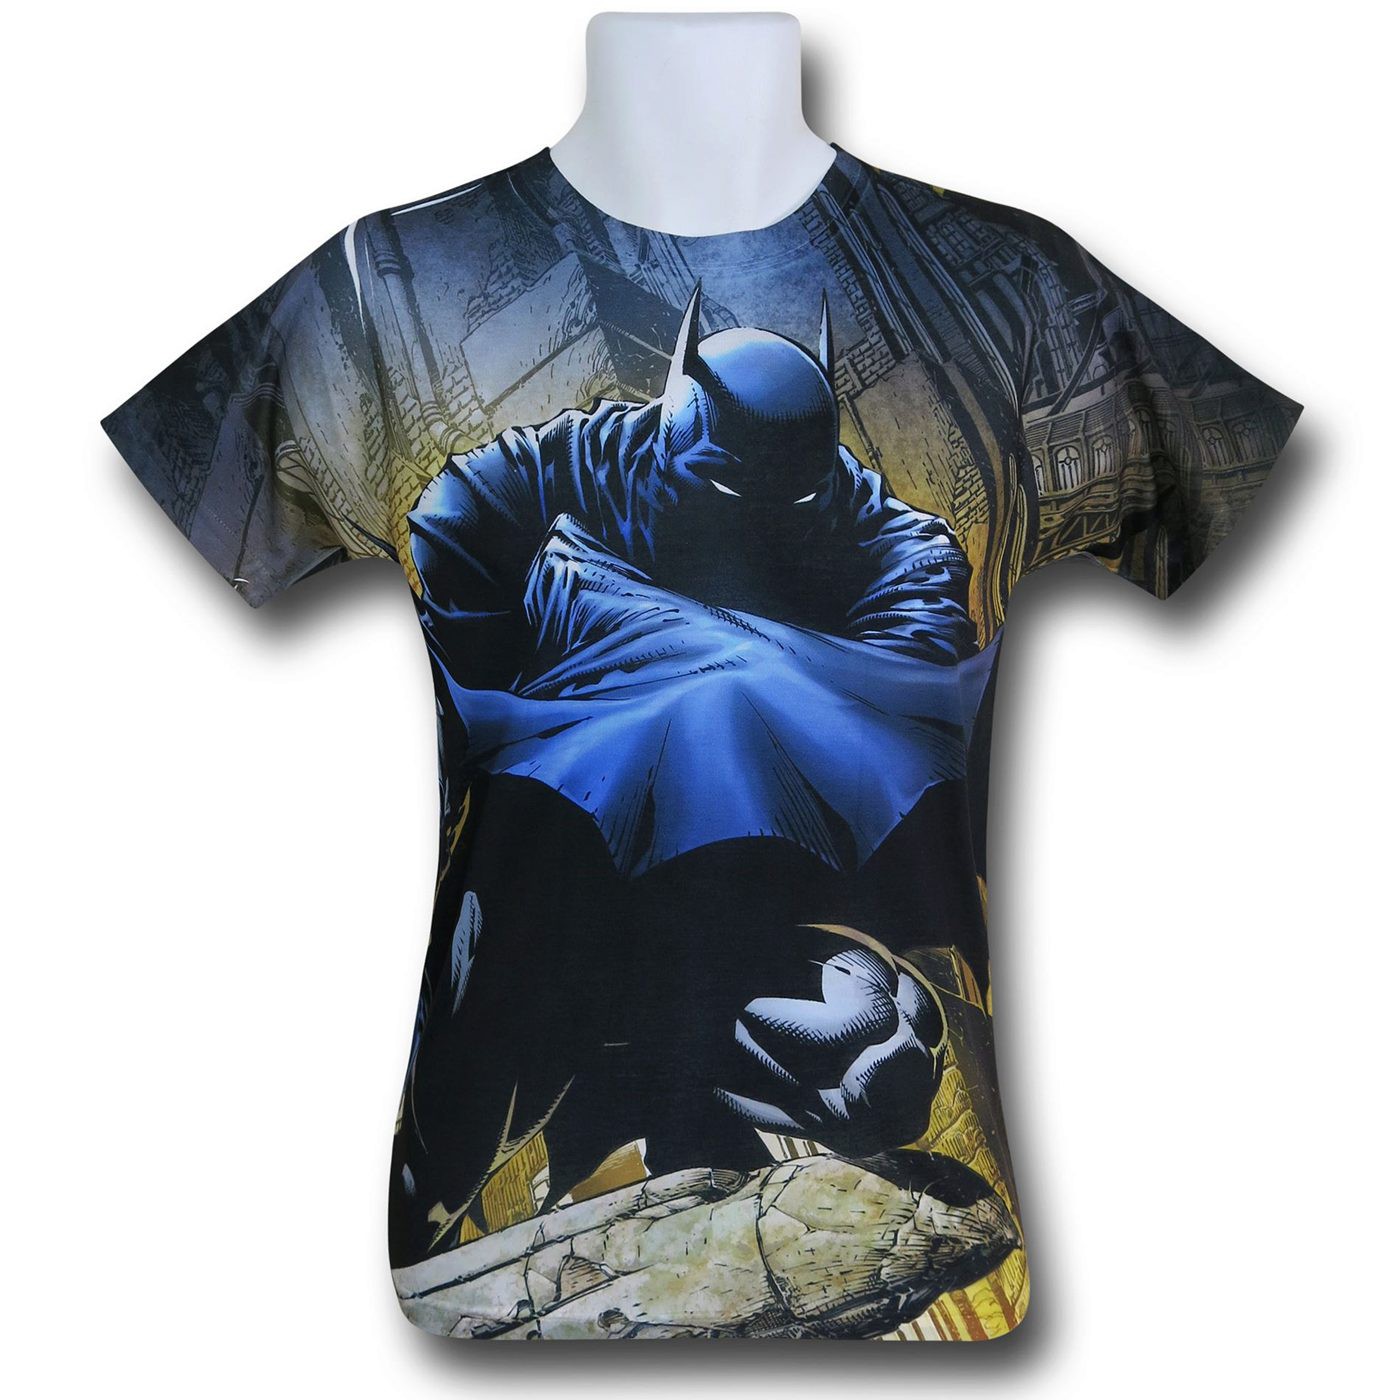 Batman Shadowed Cowl Sublimated T-Shirt